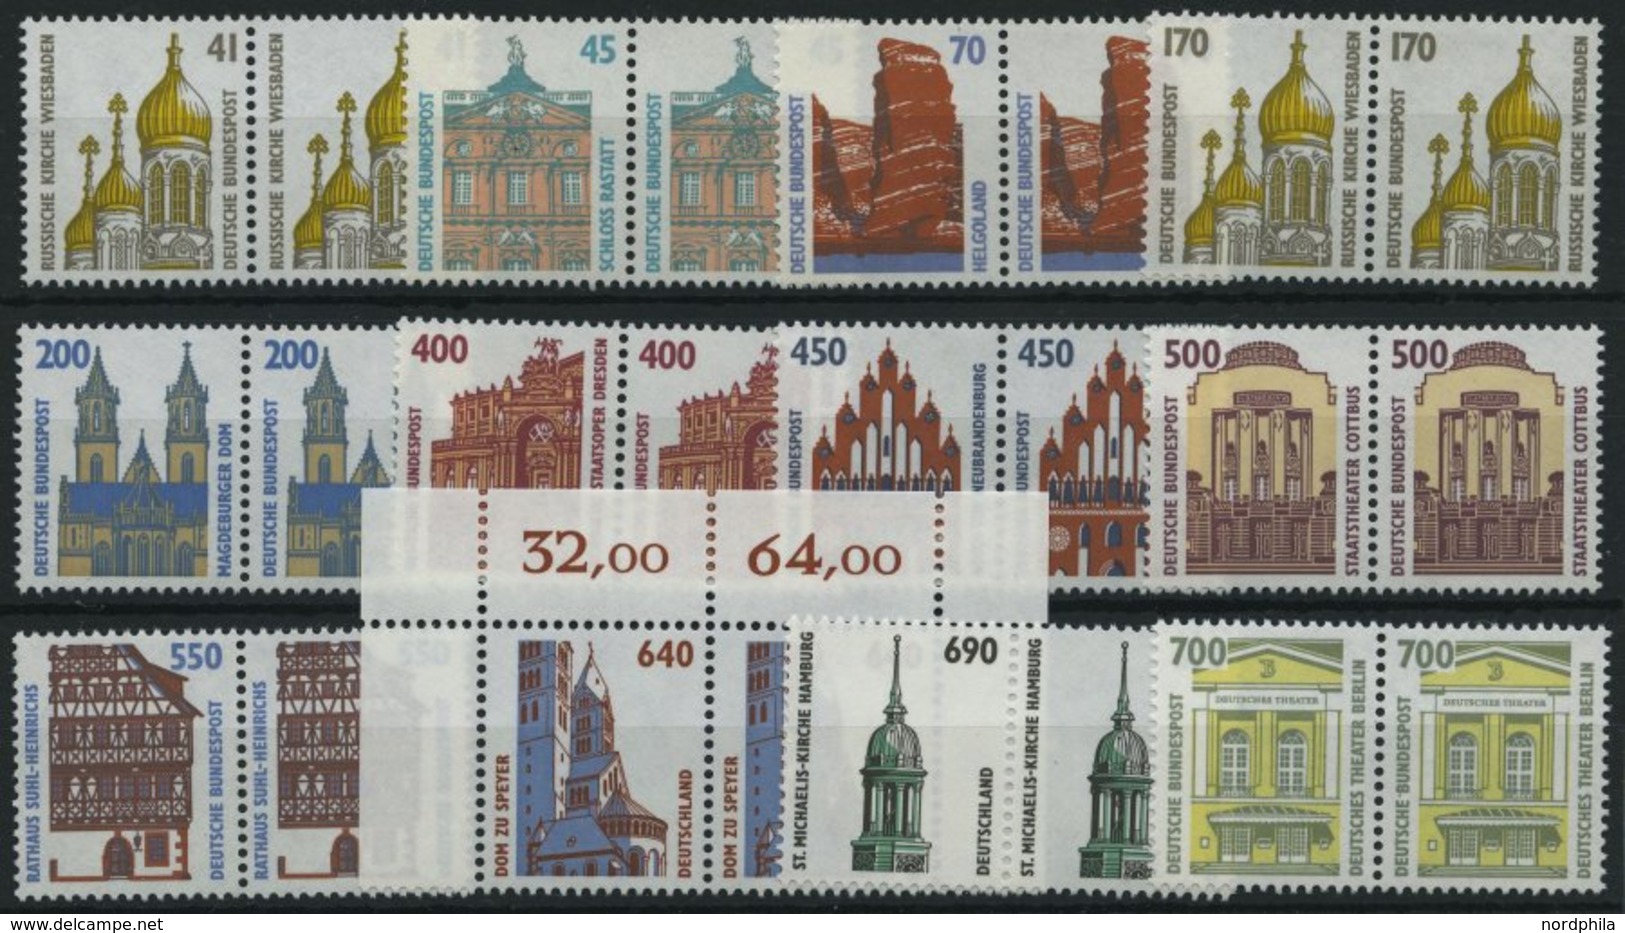 BUNDESREPUBLIK A. 1468-1860 Paar **, 1990-96, Sehenswürdigkeiten In Waagerechten Paaren, Pracht, Mi. 122.- - Used Stamps